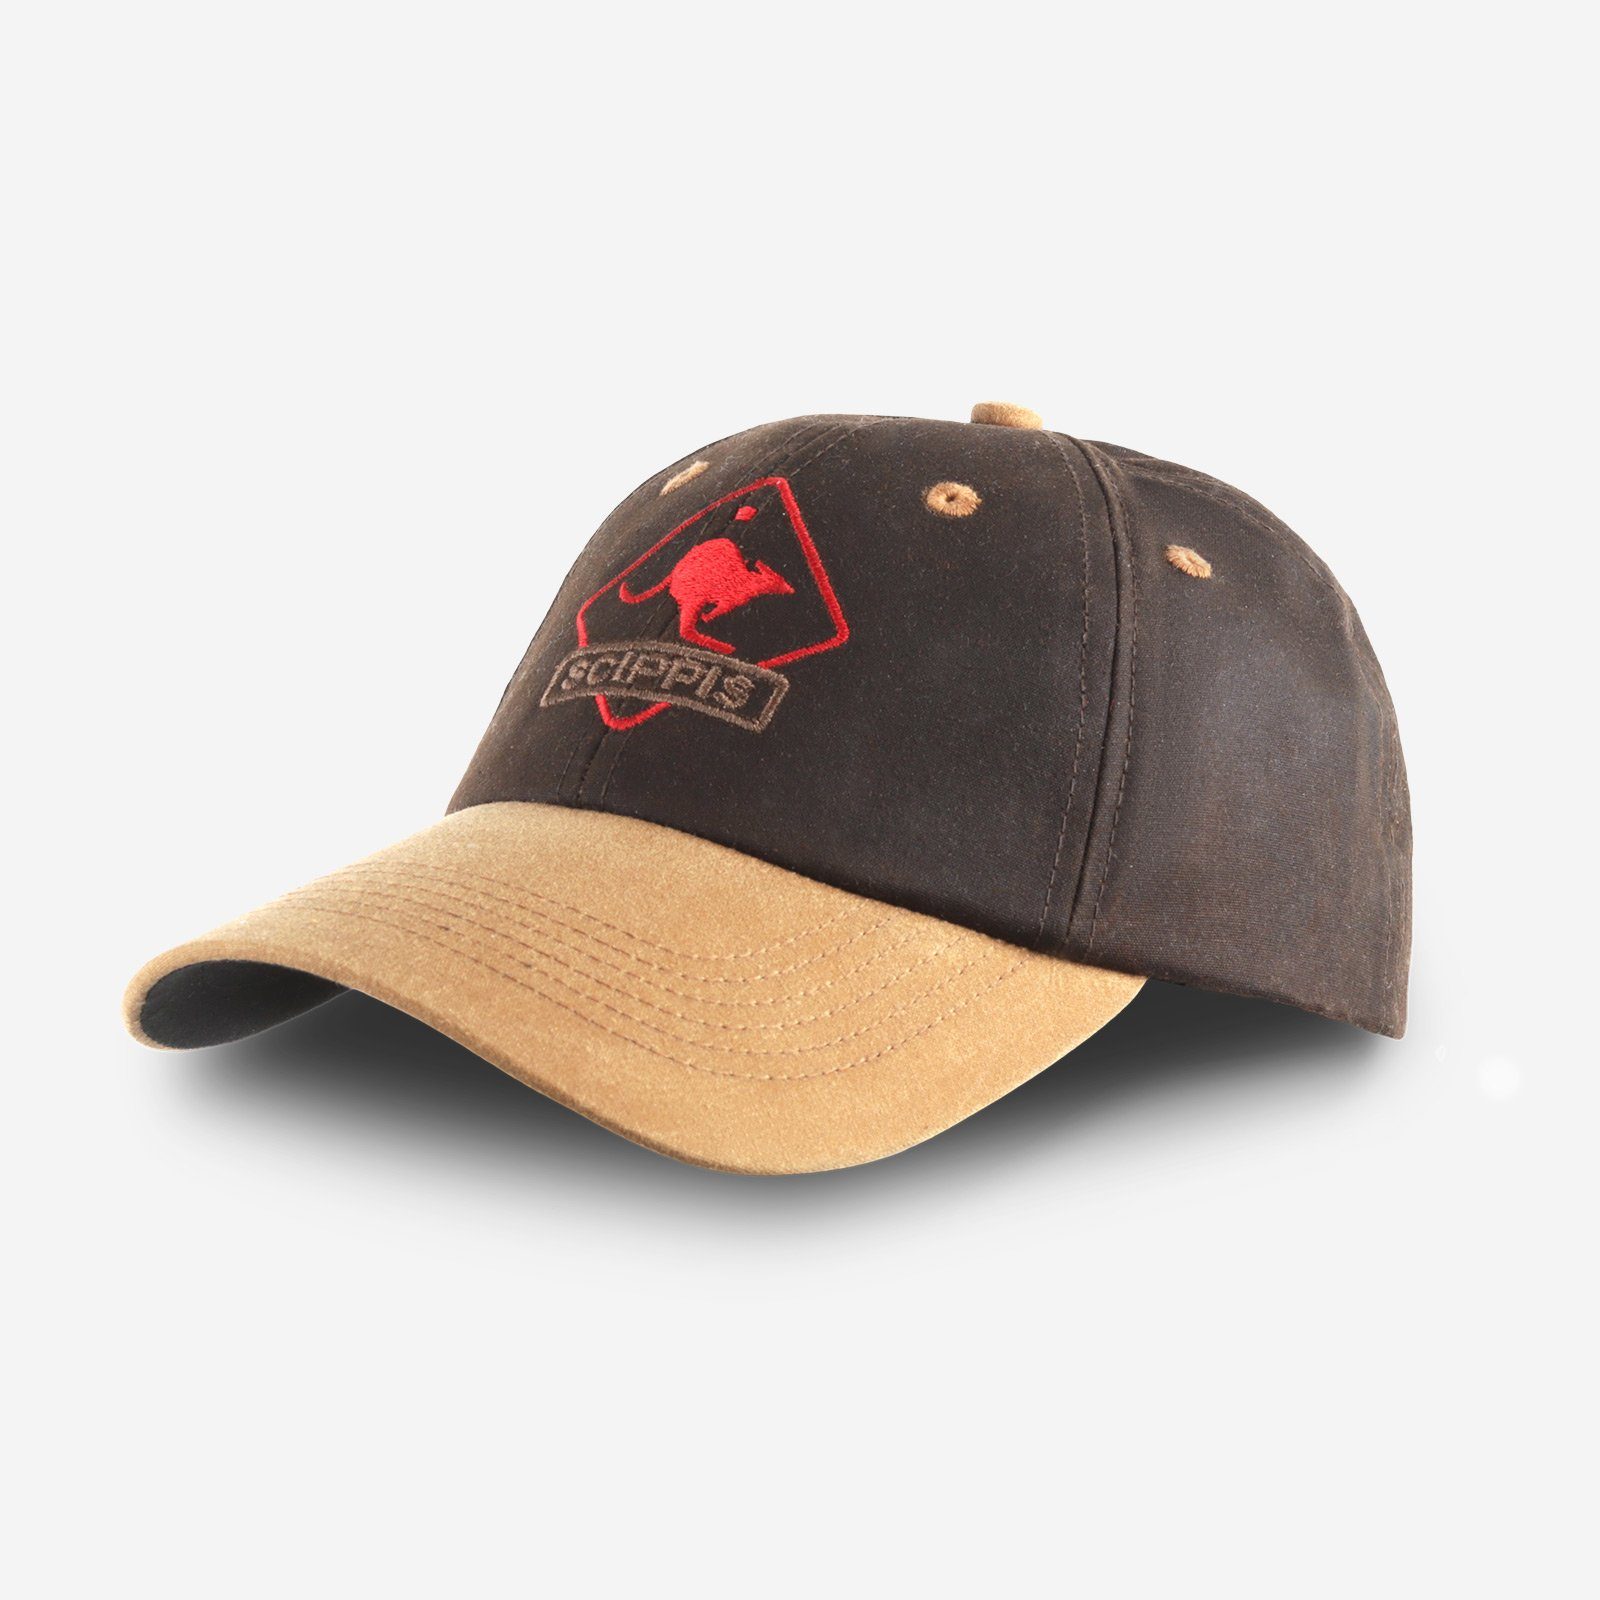 Scippis Baseball tan/brown atmungsaktiv wasserabweisend, OILSKIN Cap windundurchlässig Extrem CAP